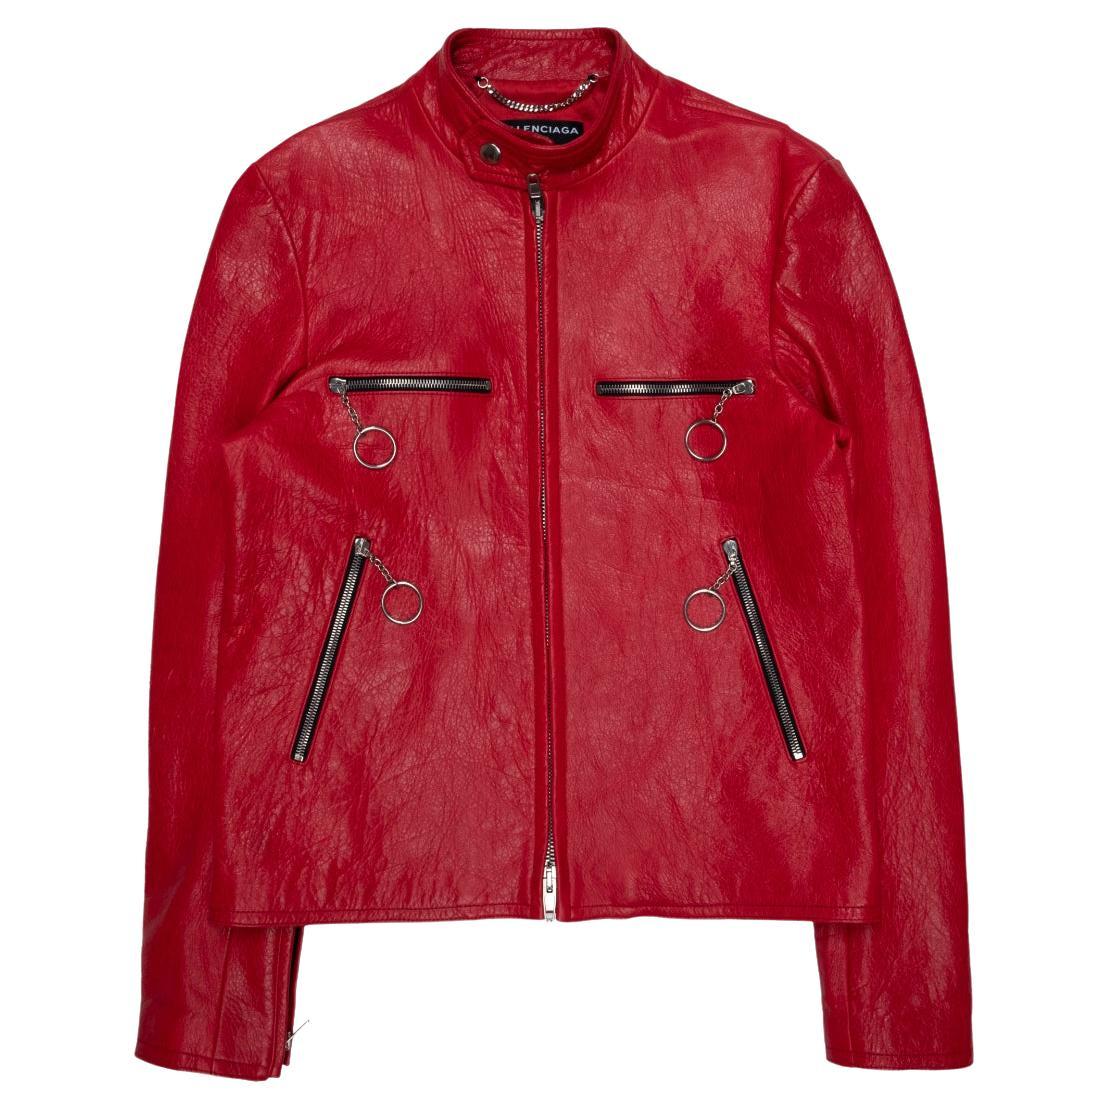 Balenciaga  Jackets  Coats  Sale 275 Balenciaga Moto Leather Jacket 34  Xs  Poshmark